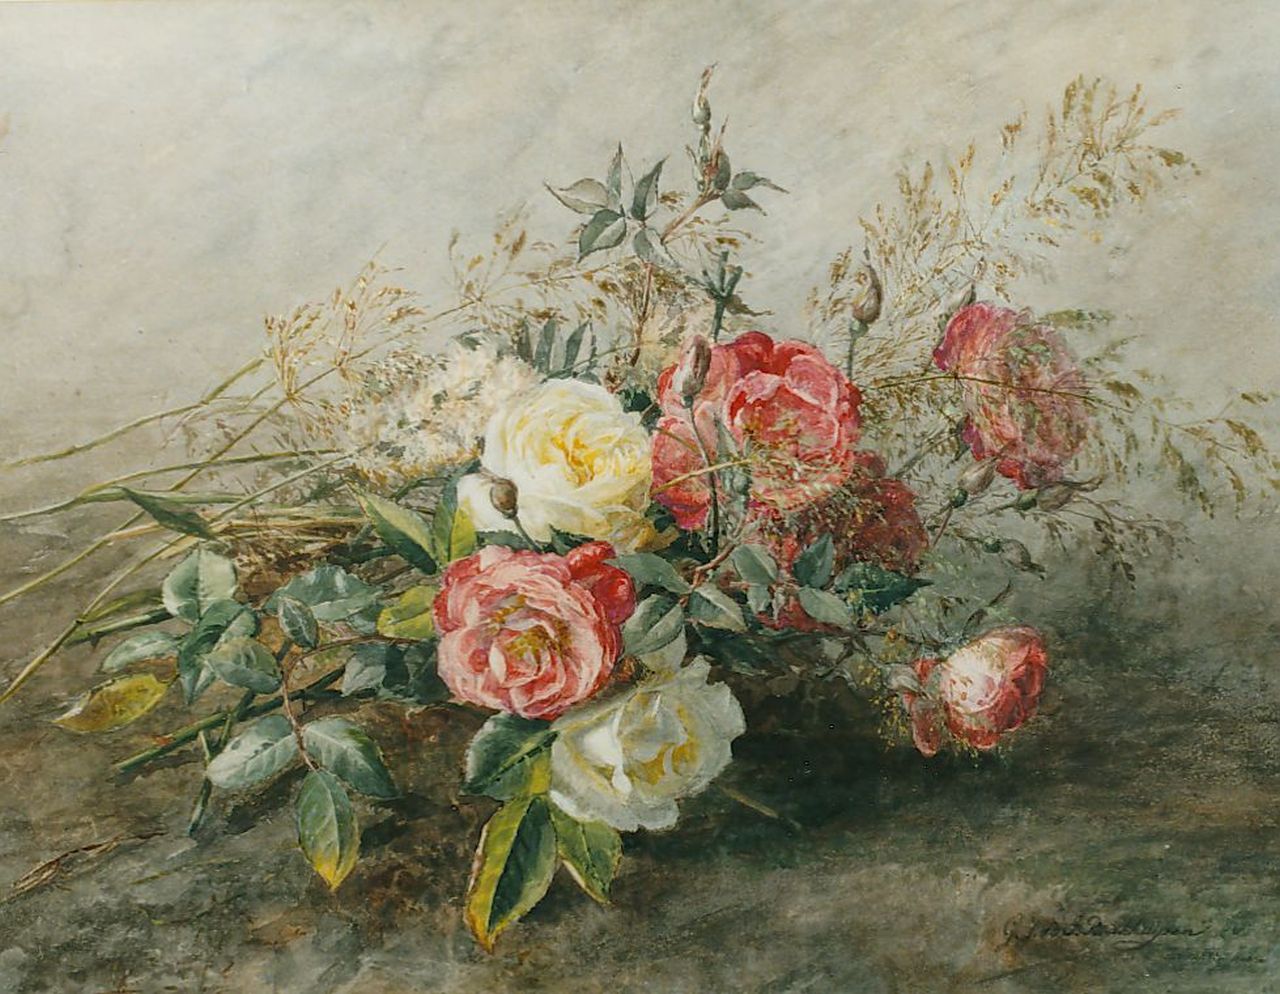 Sande Bakhuyzen G.J. van de | 'Gerardine' Jacoba van de Sande Bakhuyzen, Bouquet of roses, watercolour on paper 36.0 x 46.0 cm, signed l.r.